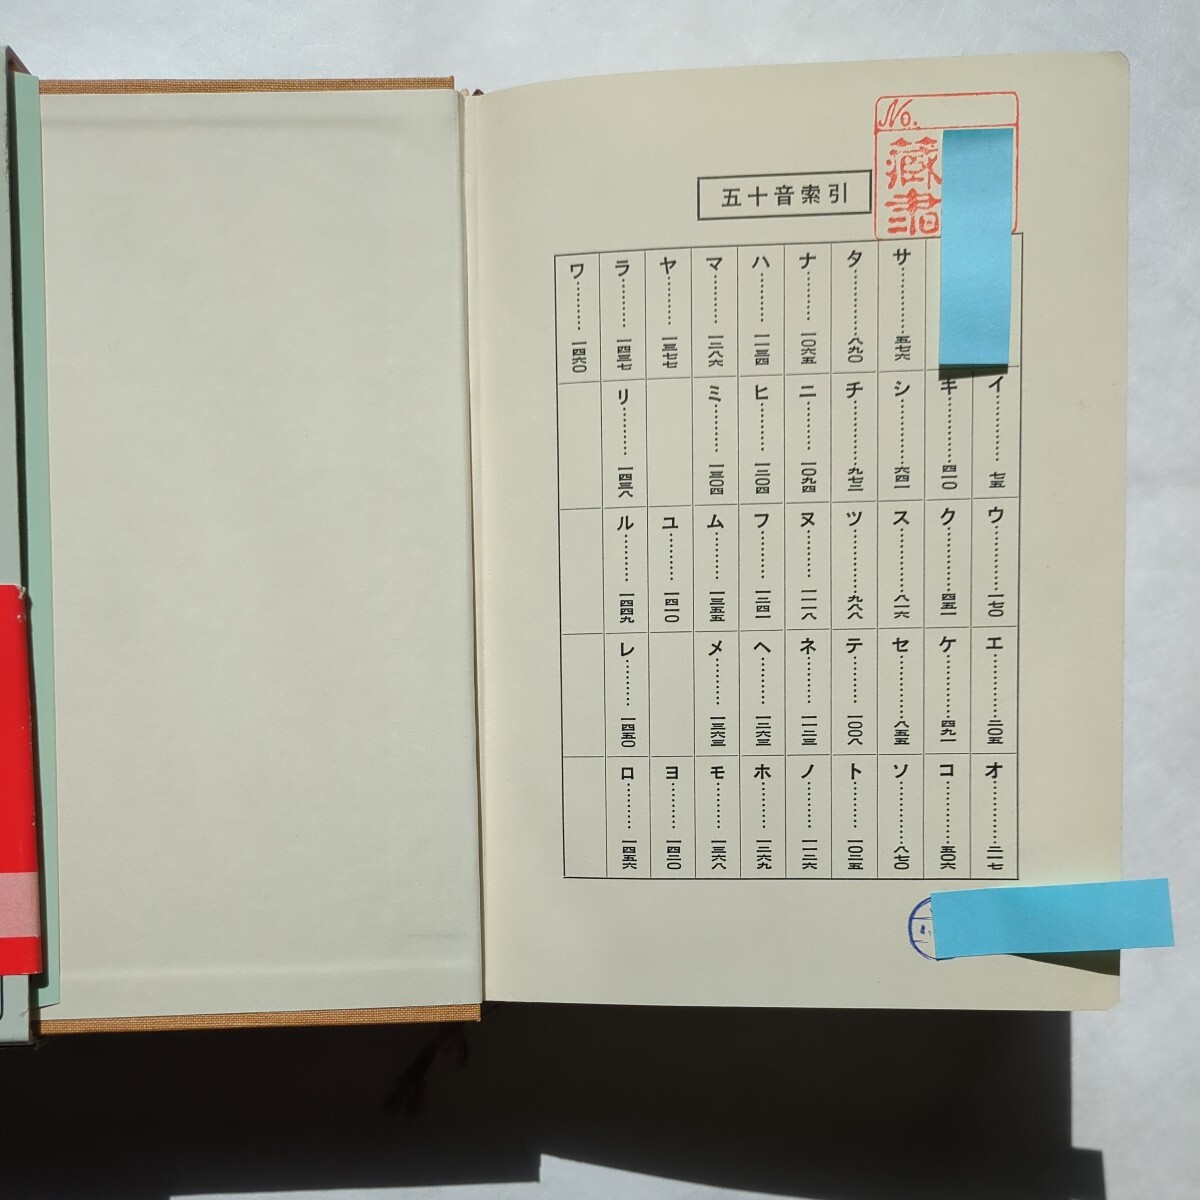 神道大事典　臨川書店　定価 15,500円_個人名の蔵書印、日付印あり。